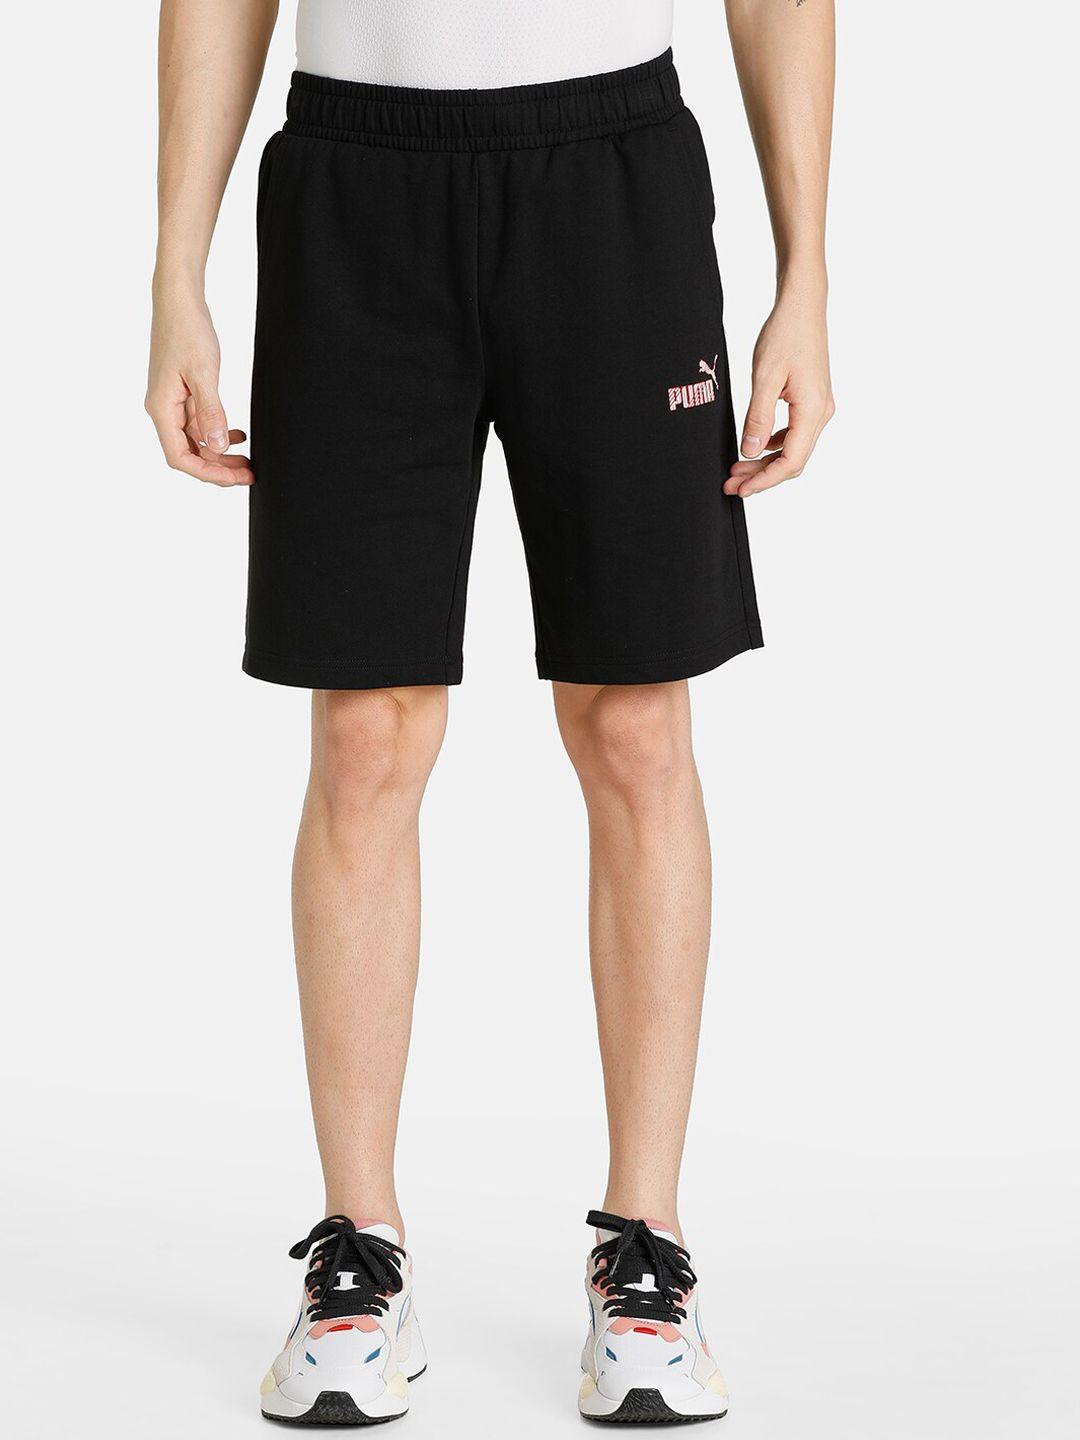 puma-men-black-criss-cross-slim-fit-sports-shorts